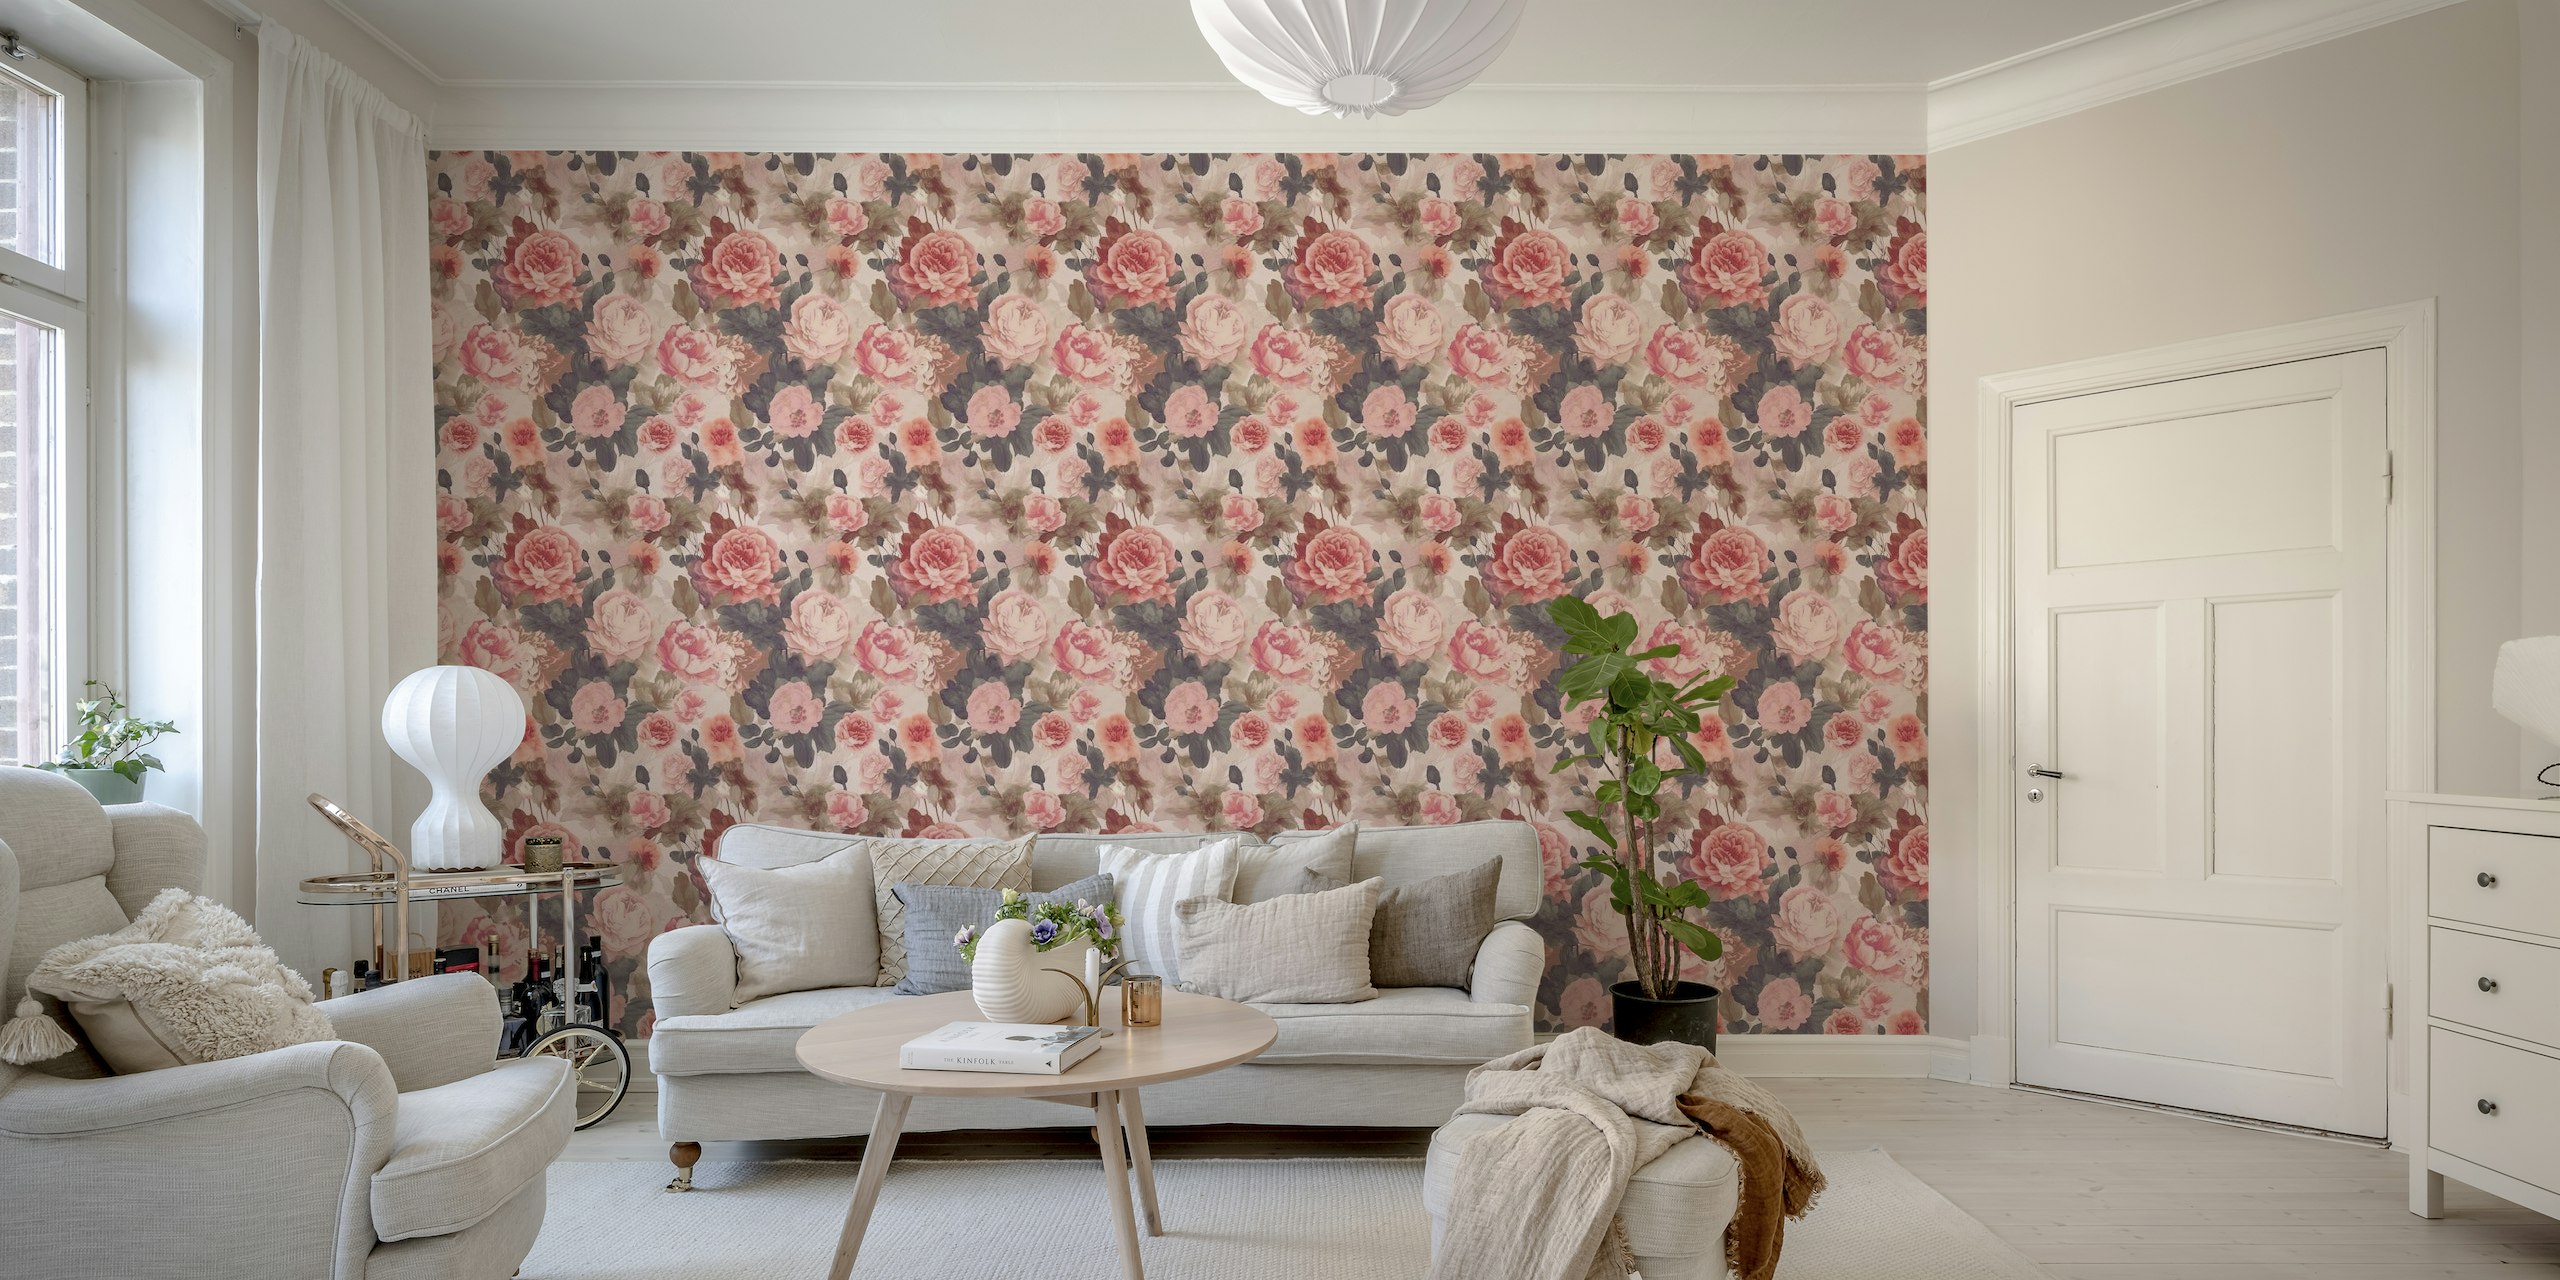 Baroque Roses Floral Nostalgia Design In Moody Pink Colors papel de parede